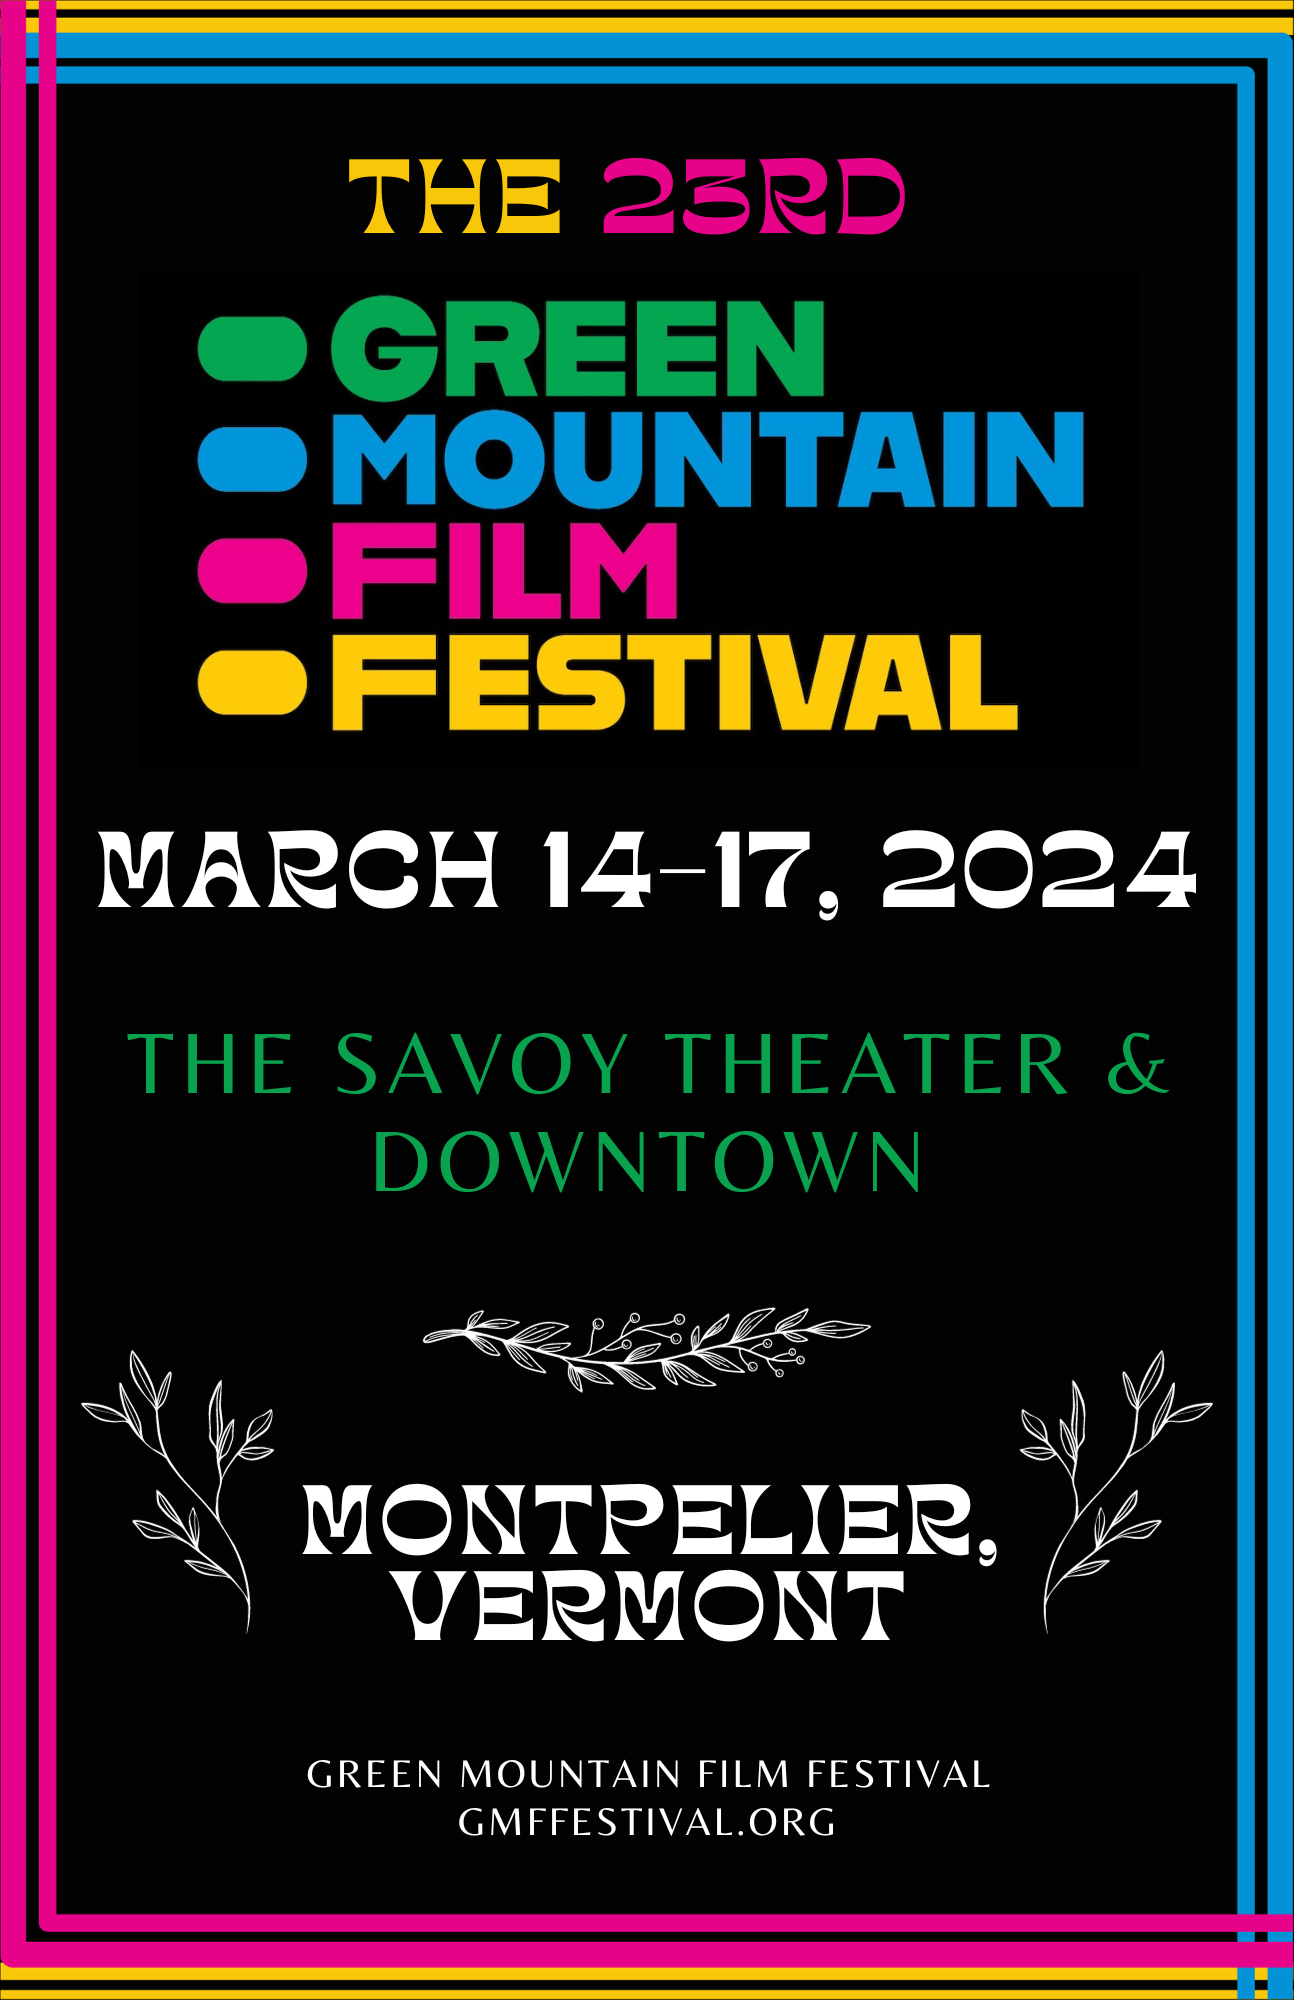 Green Mountain Film Festival